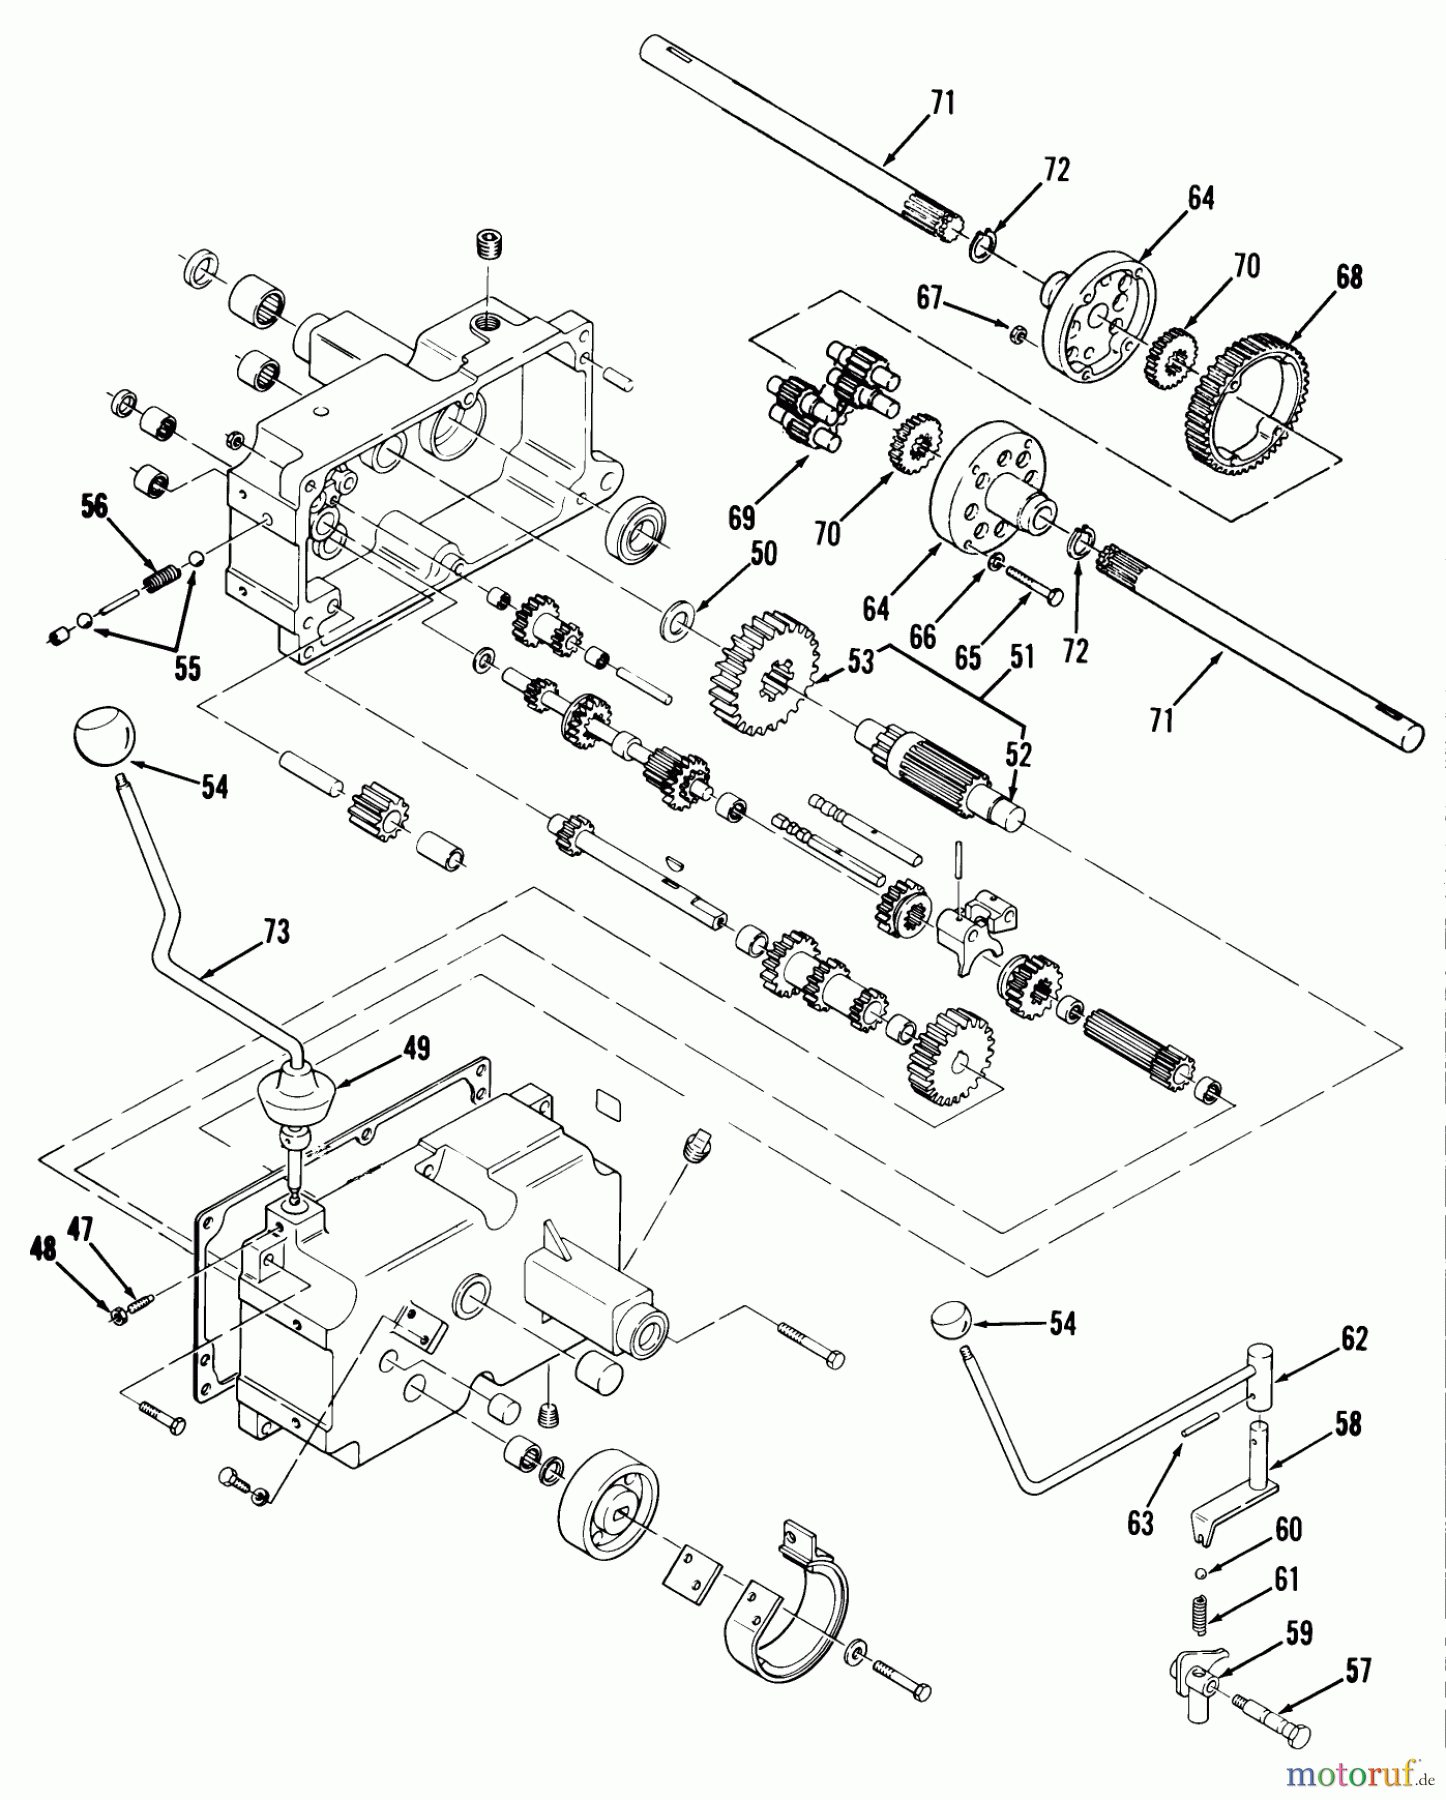  Toro Neu Mowers, Lawn & Garden Tractor Seite 1 01-11B803 (1100) - Toro 1100 Special Tractor, 1980 MECHANICAL TRANSMISSION-8 SPEED #2